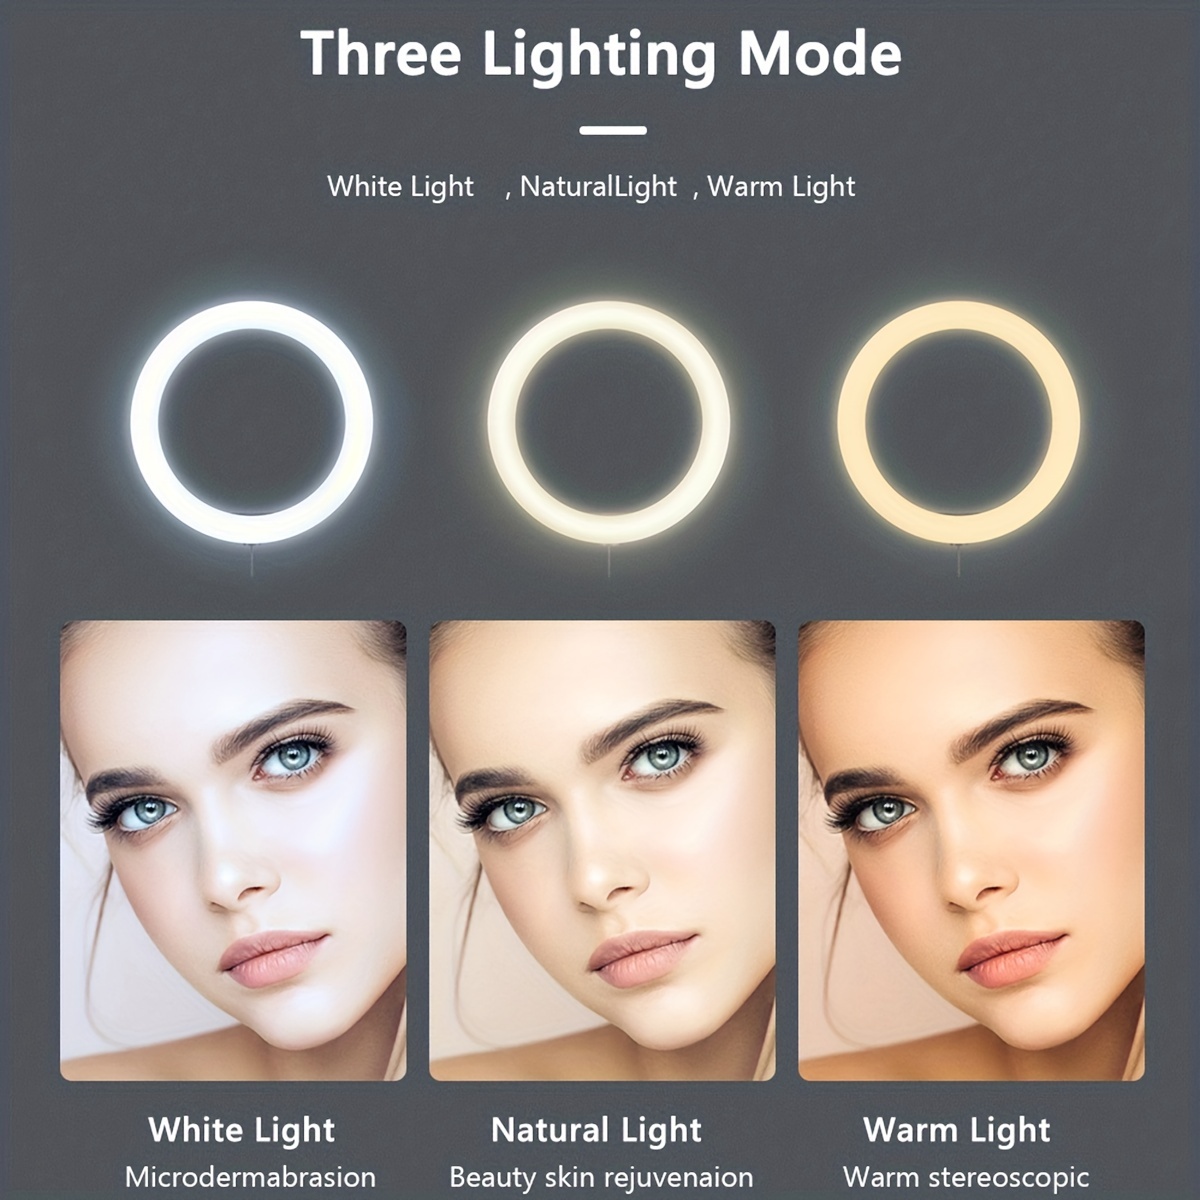 Aro De Luz Para LED Fotografia Maquillaje Para Celular Con Tripode Y Soporte